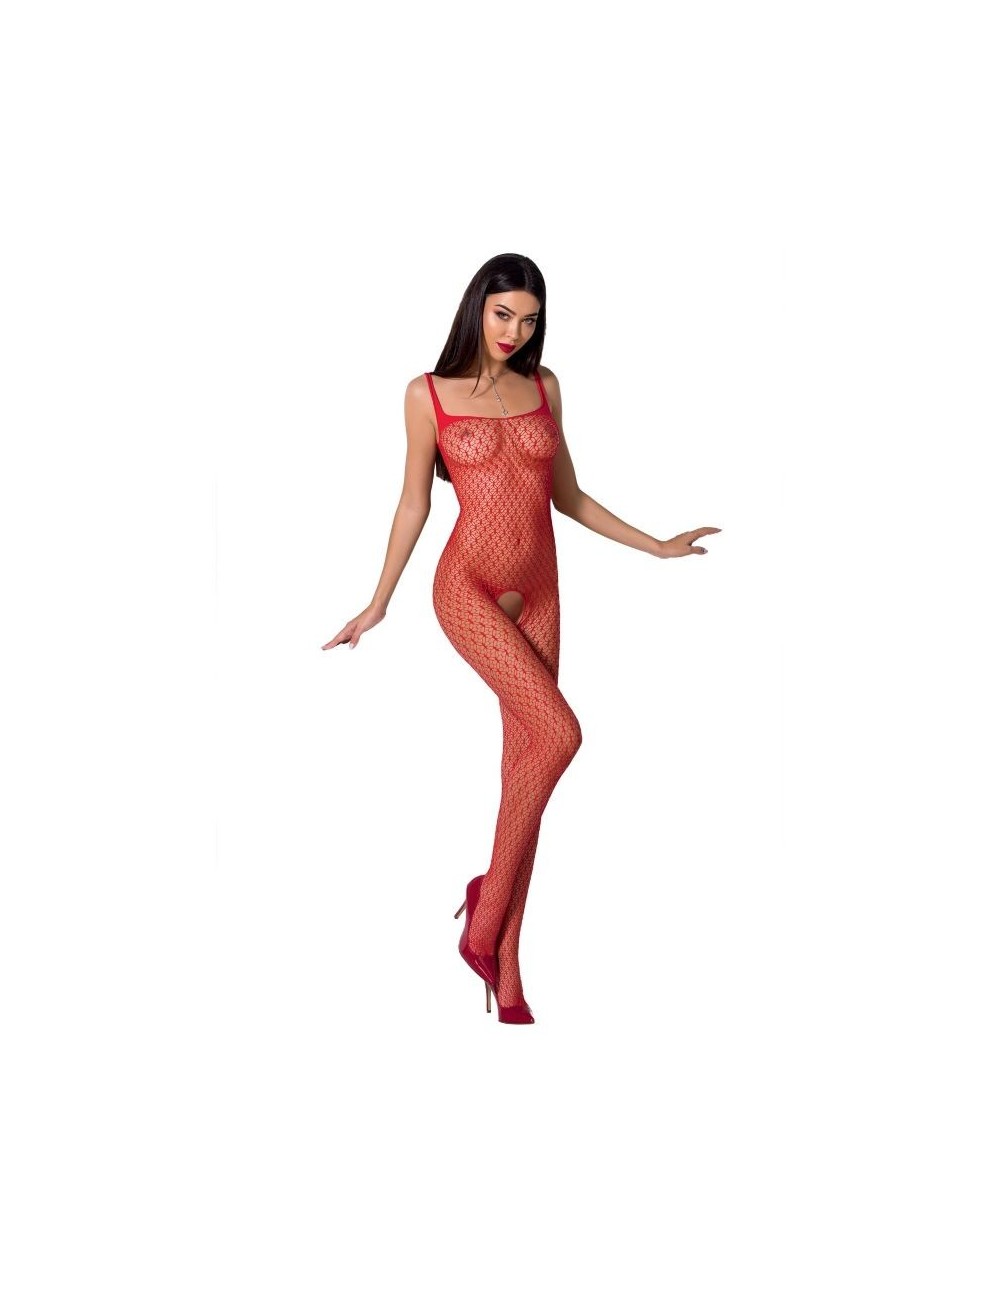 Lingerie - Combinaisons - Bodystocking passion woman bs071 - rouge taille unique - Passion Woman Bodystockings